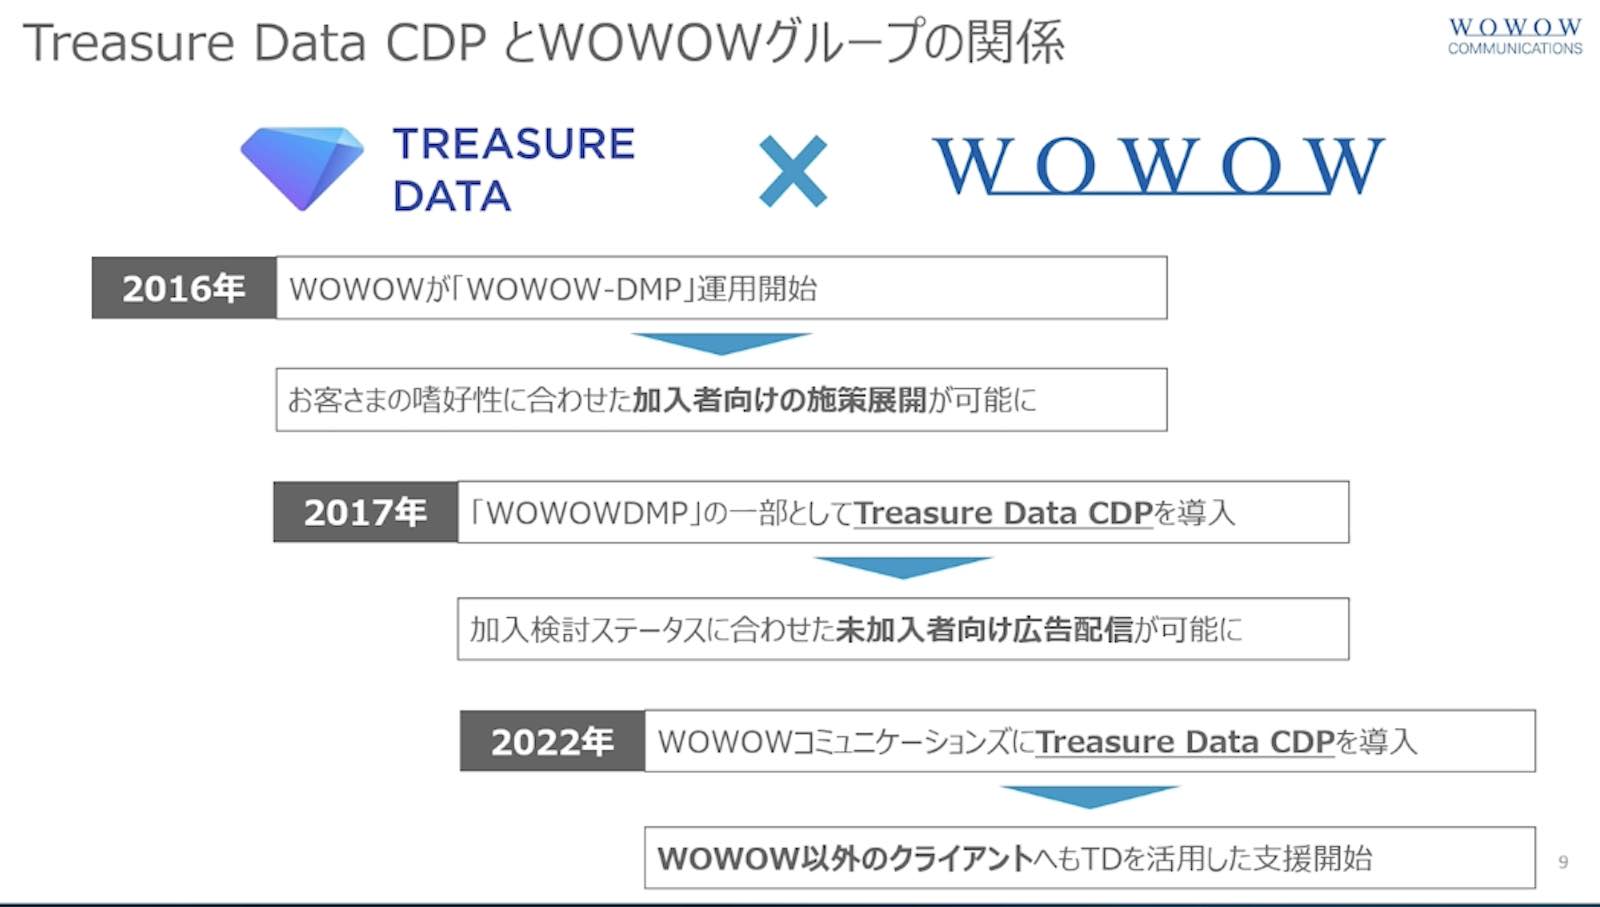 Treasure Data CDPとWOWOWグループの関係資料